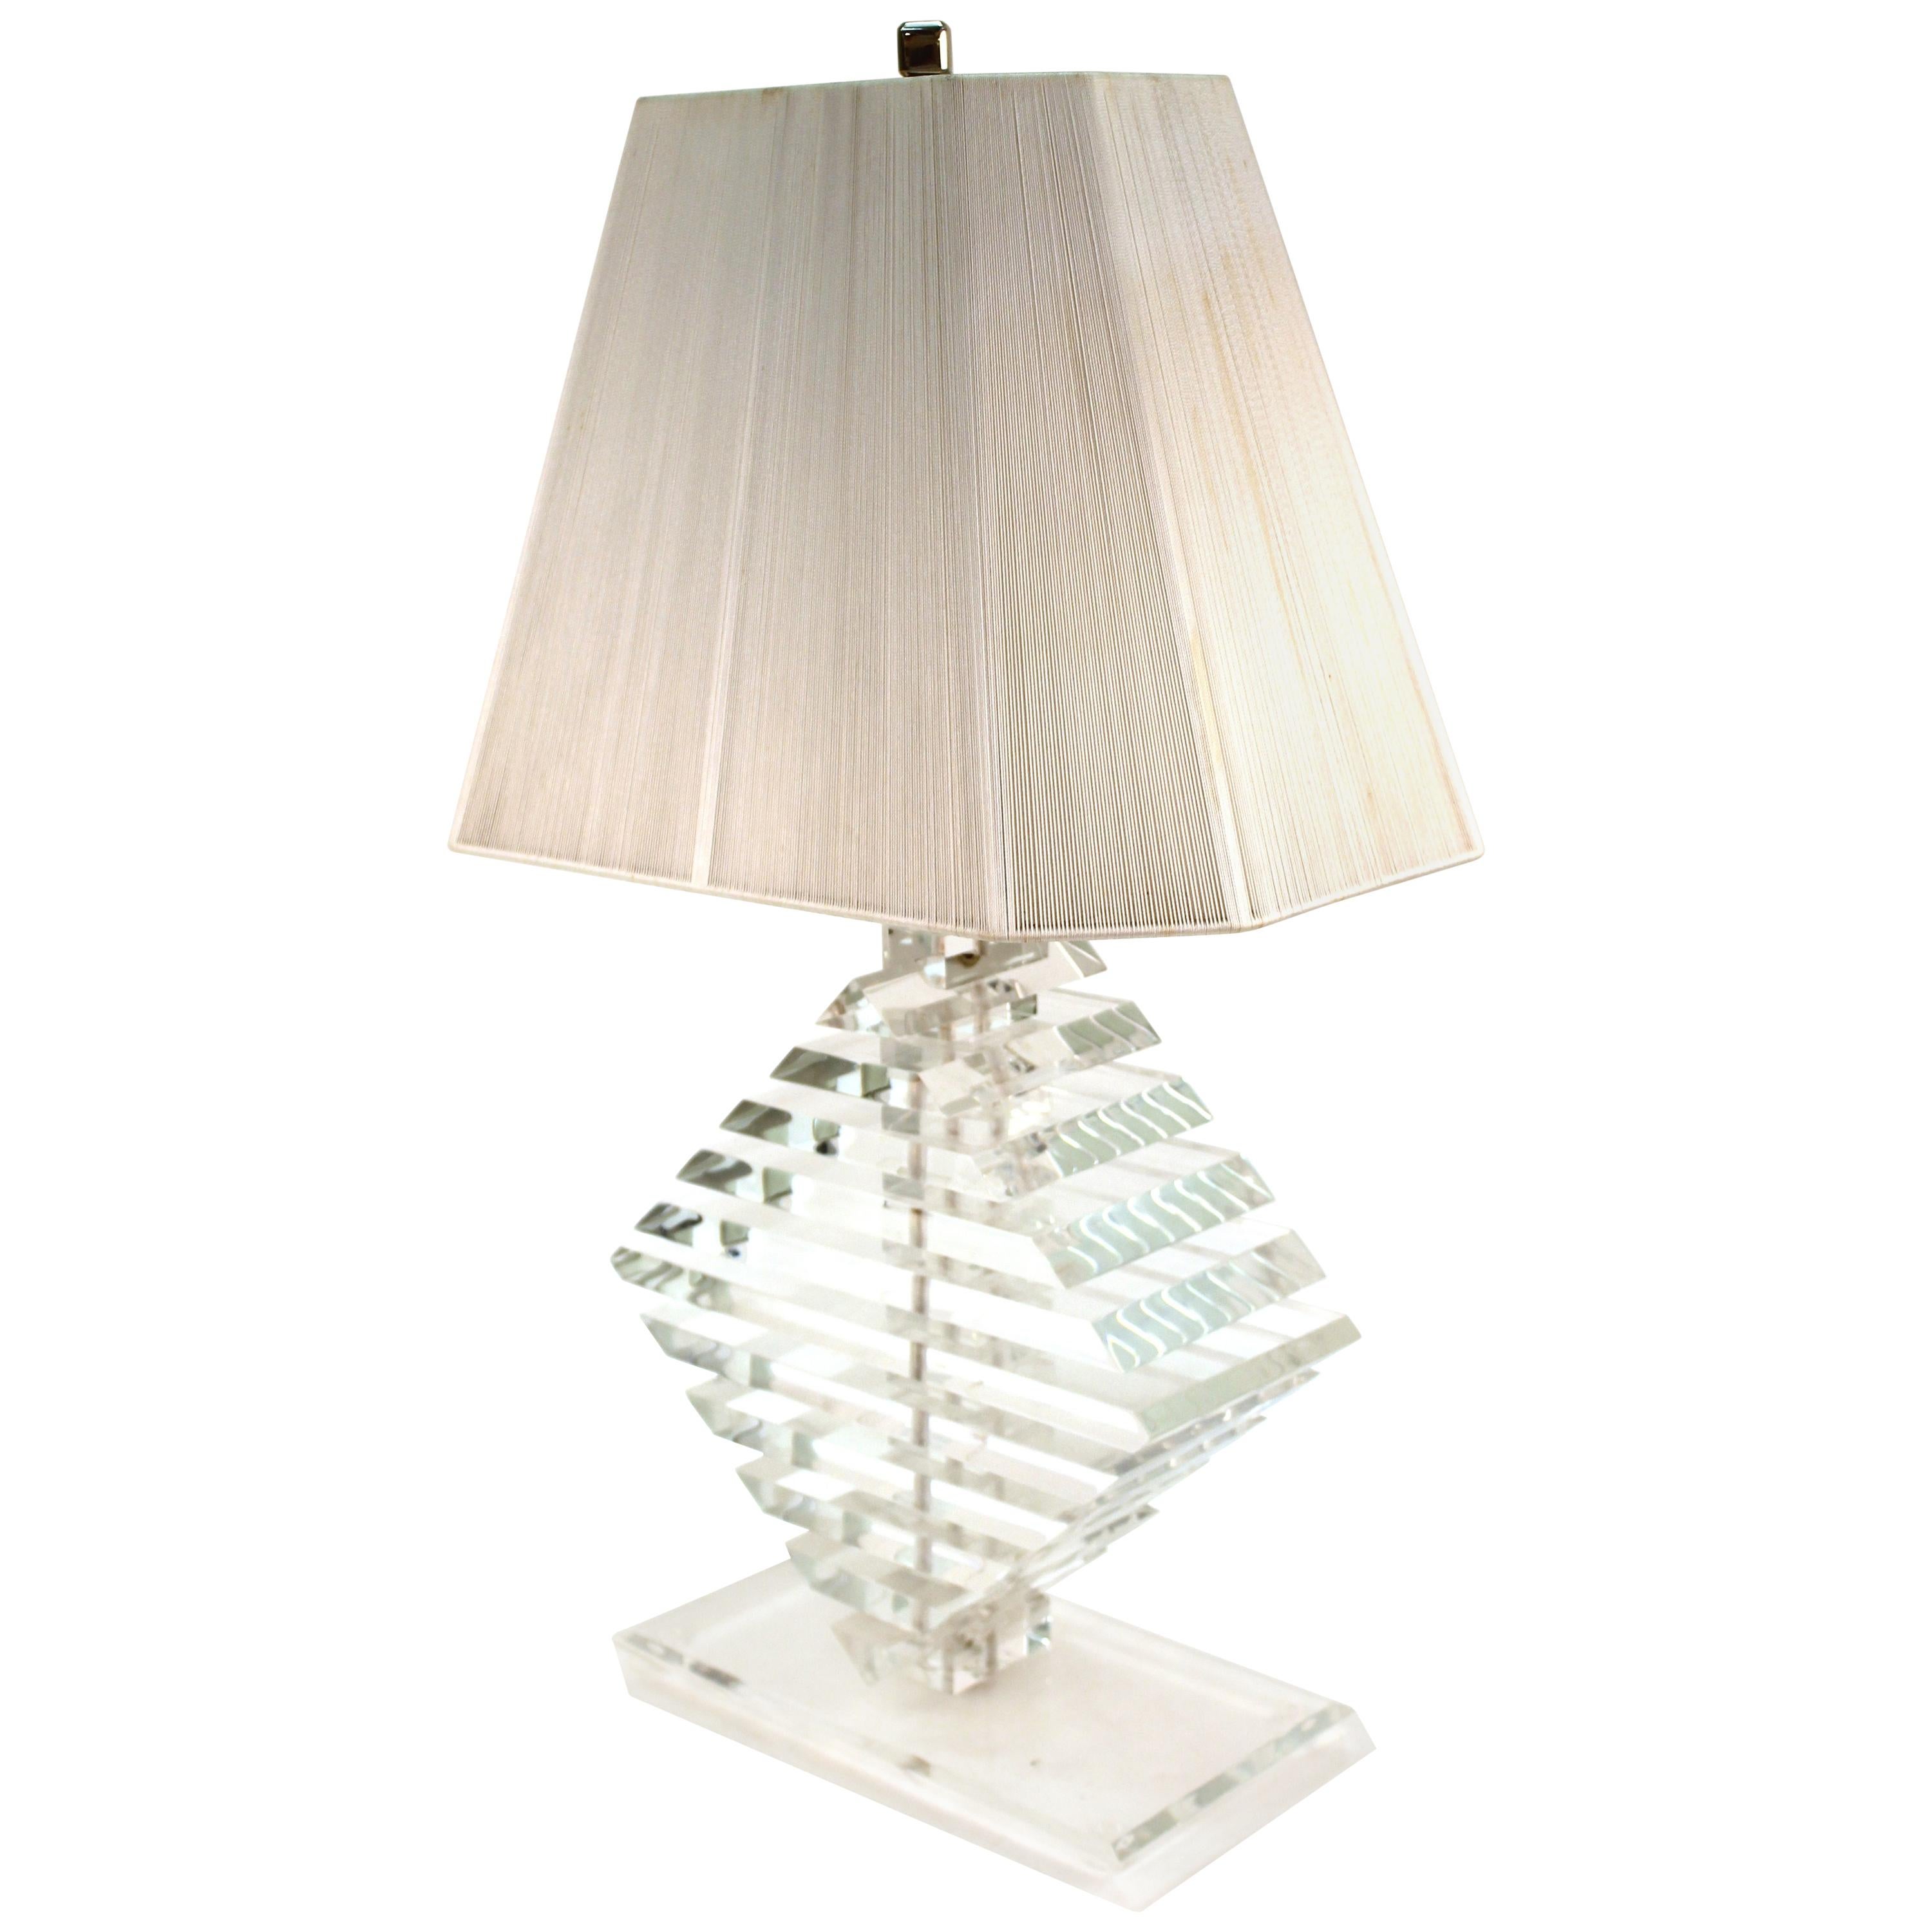 Karl Springer Style Hollywood Regency Stacked Lucite Table Lamp